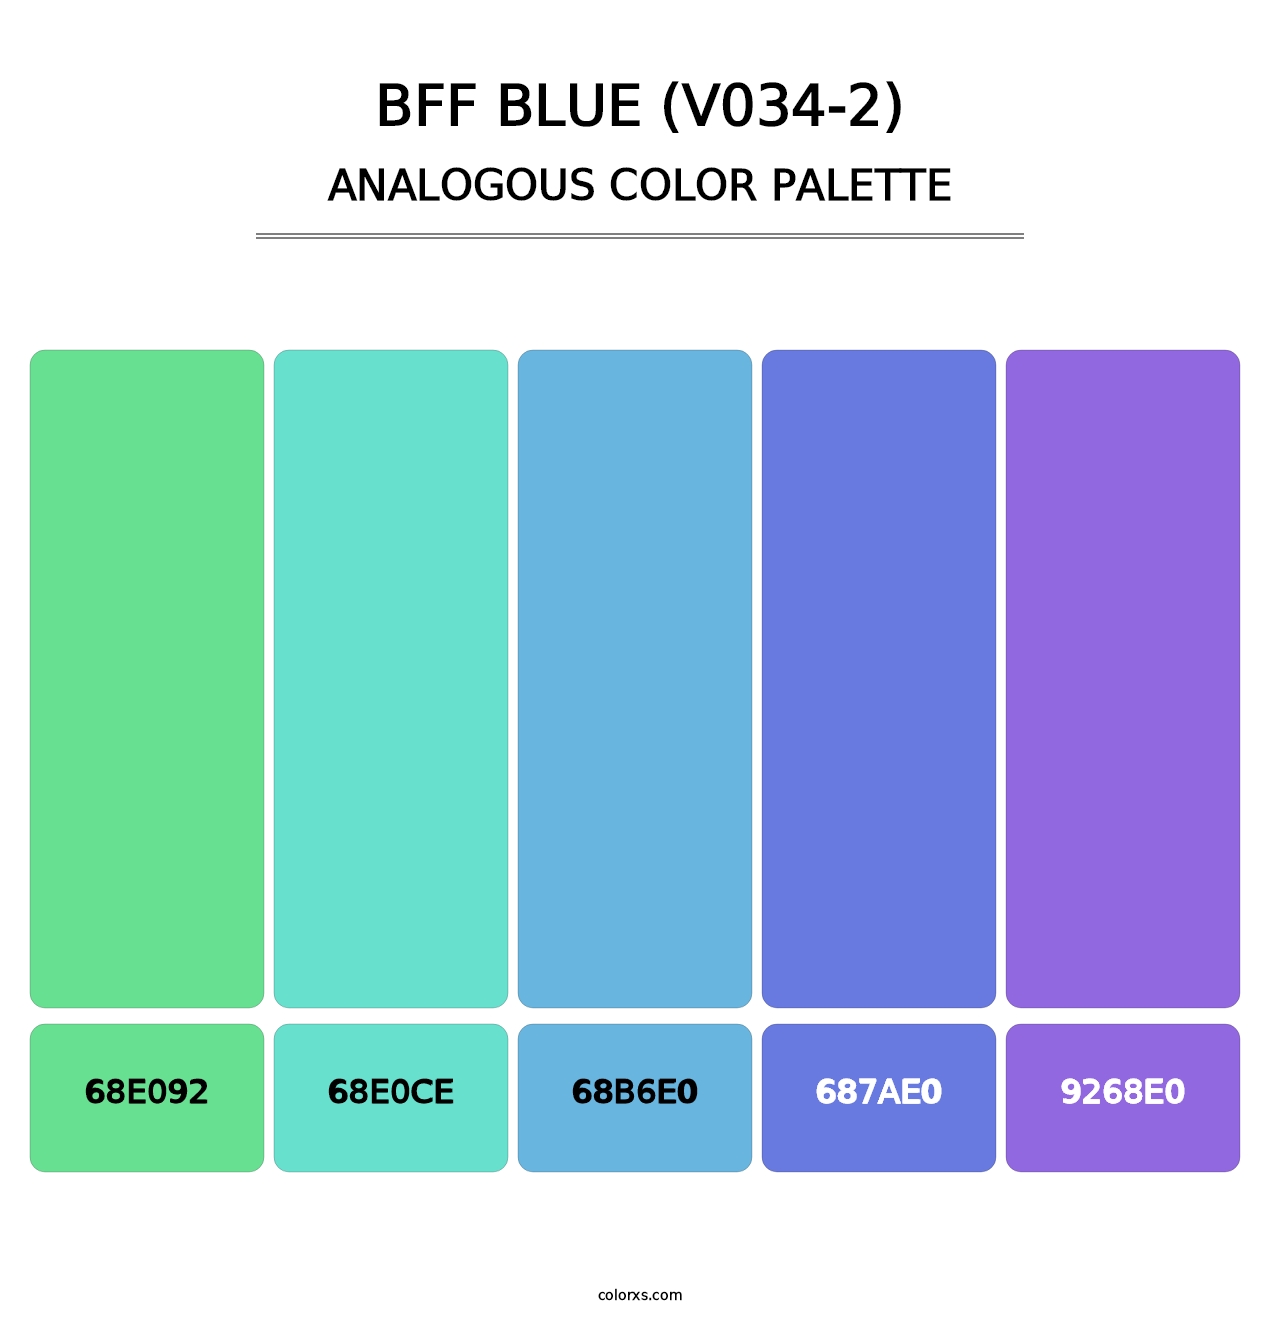 BFF Blue (V034-2) - Analogous Color Palette